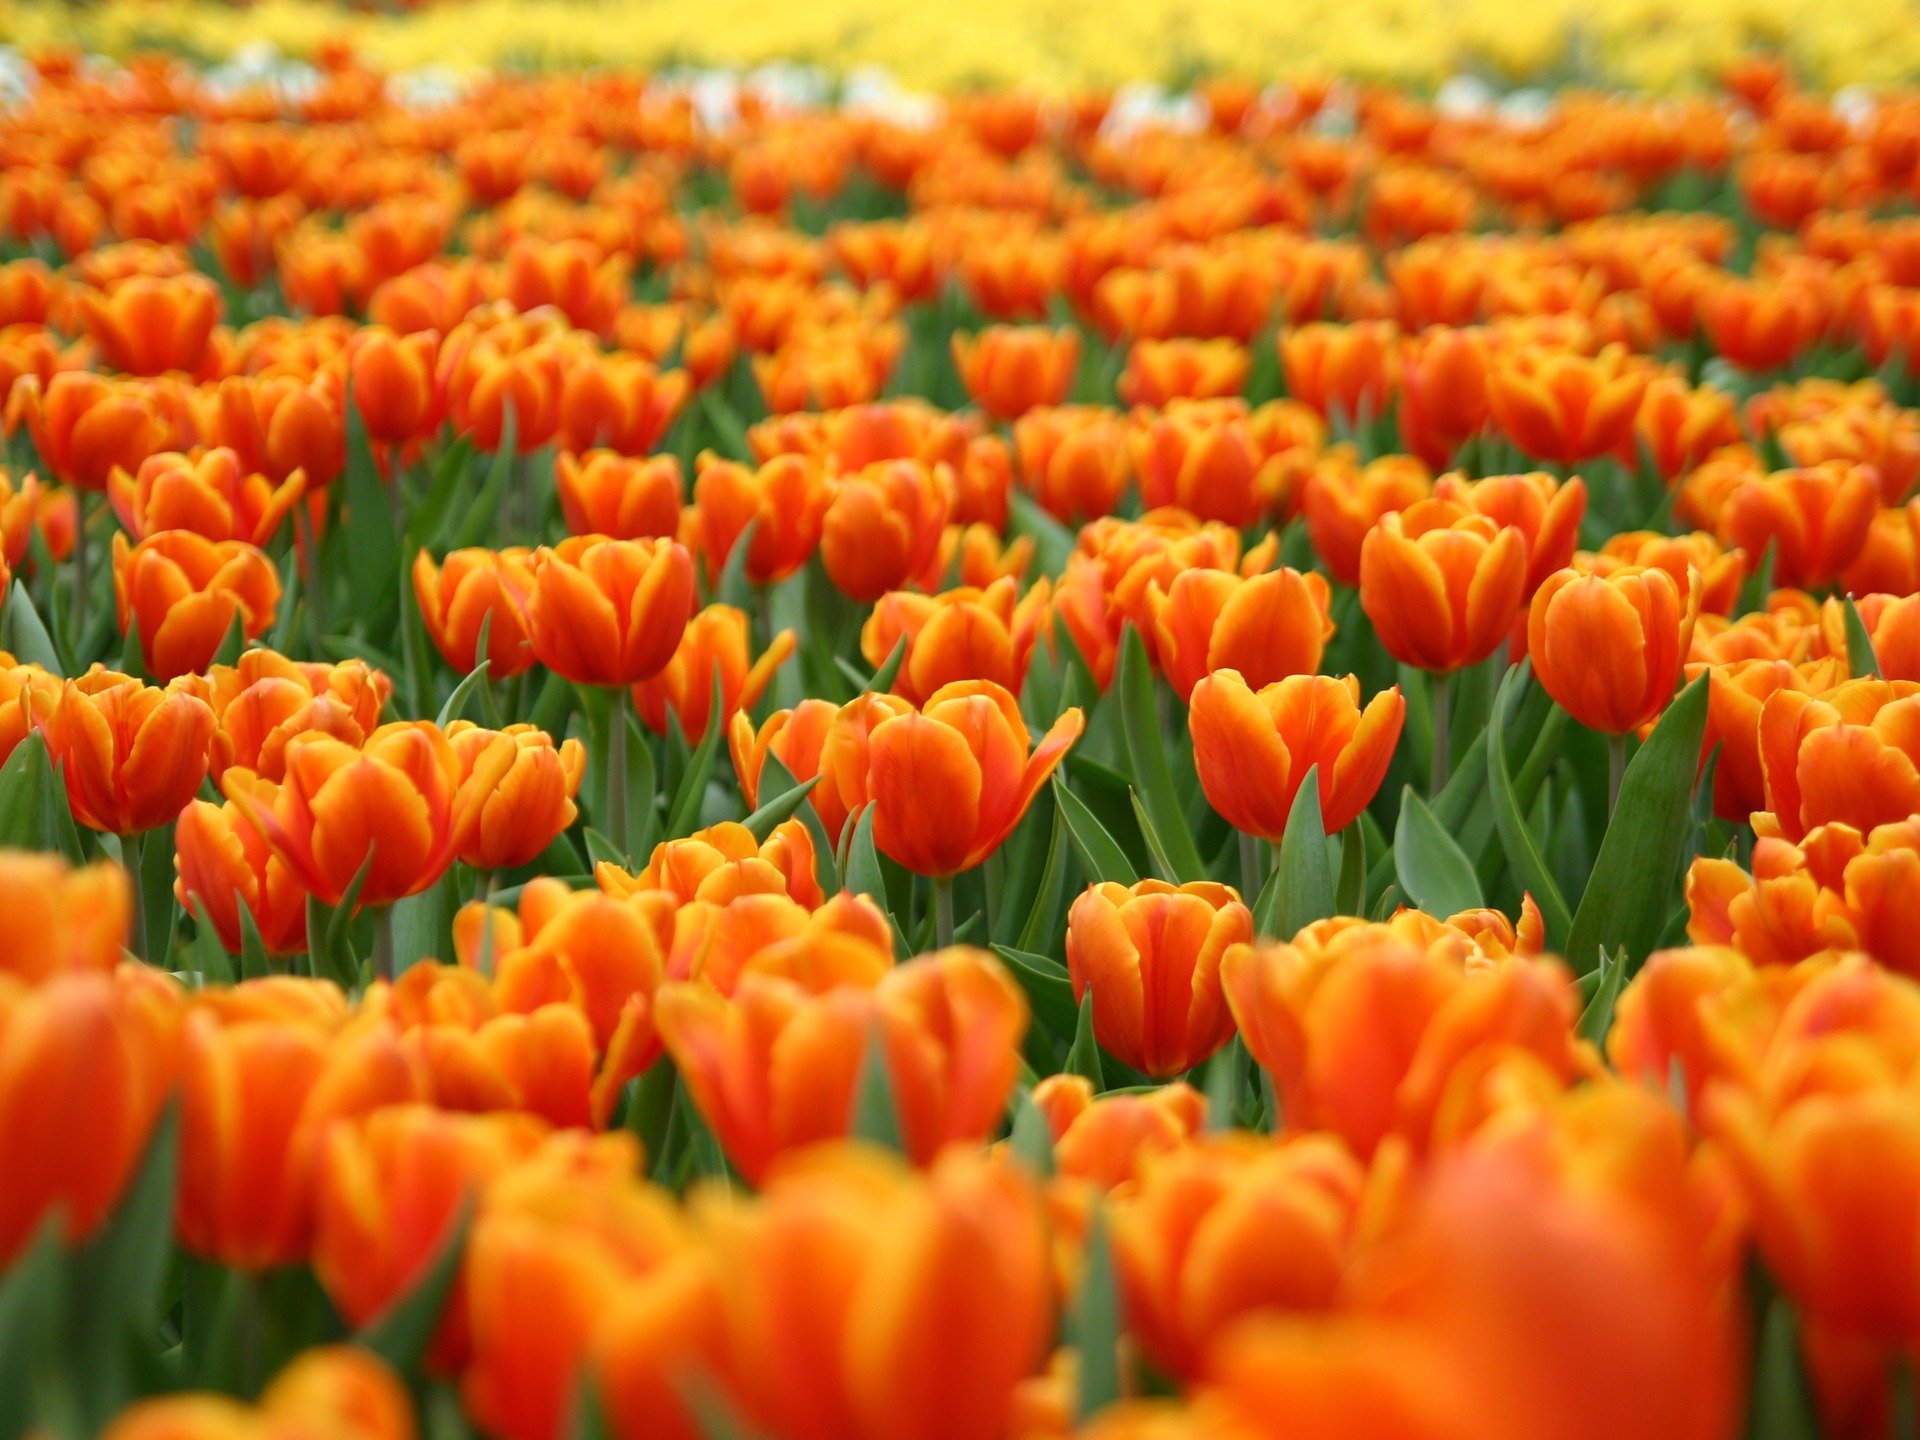 Orange Tulips Wallpaper Flowers Nature Wallpapers in jpg format for